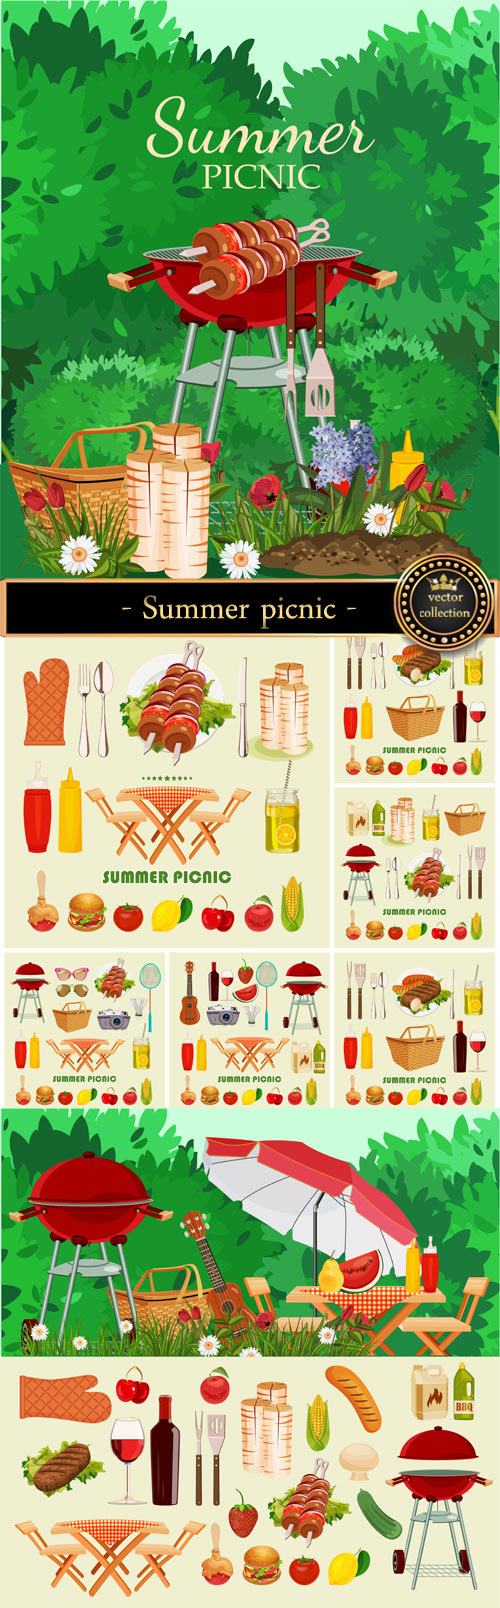 Summer picnic, barbecue, vector elements